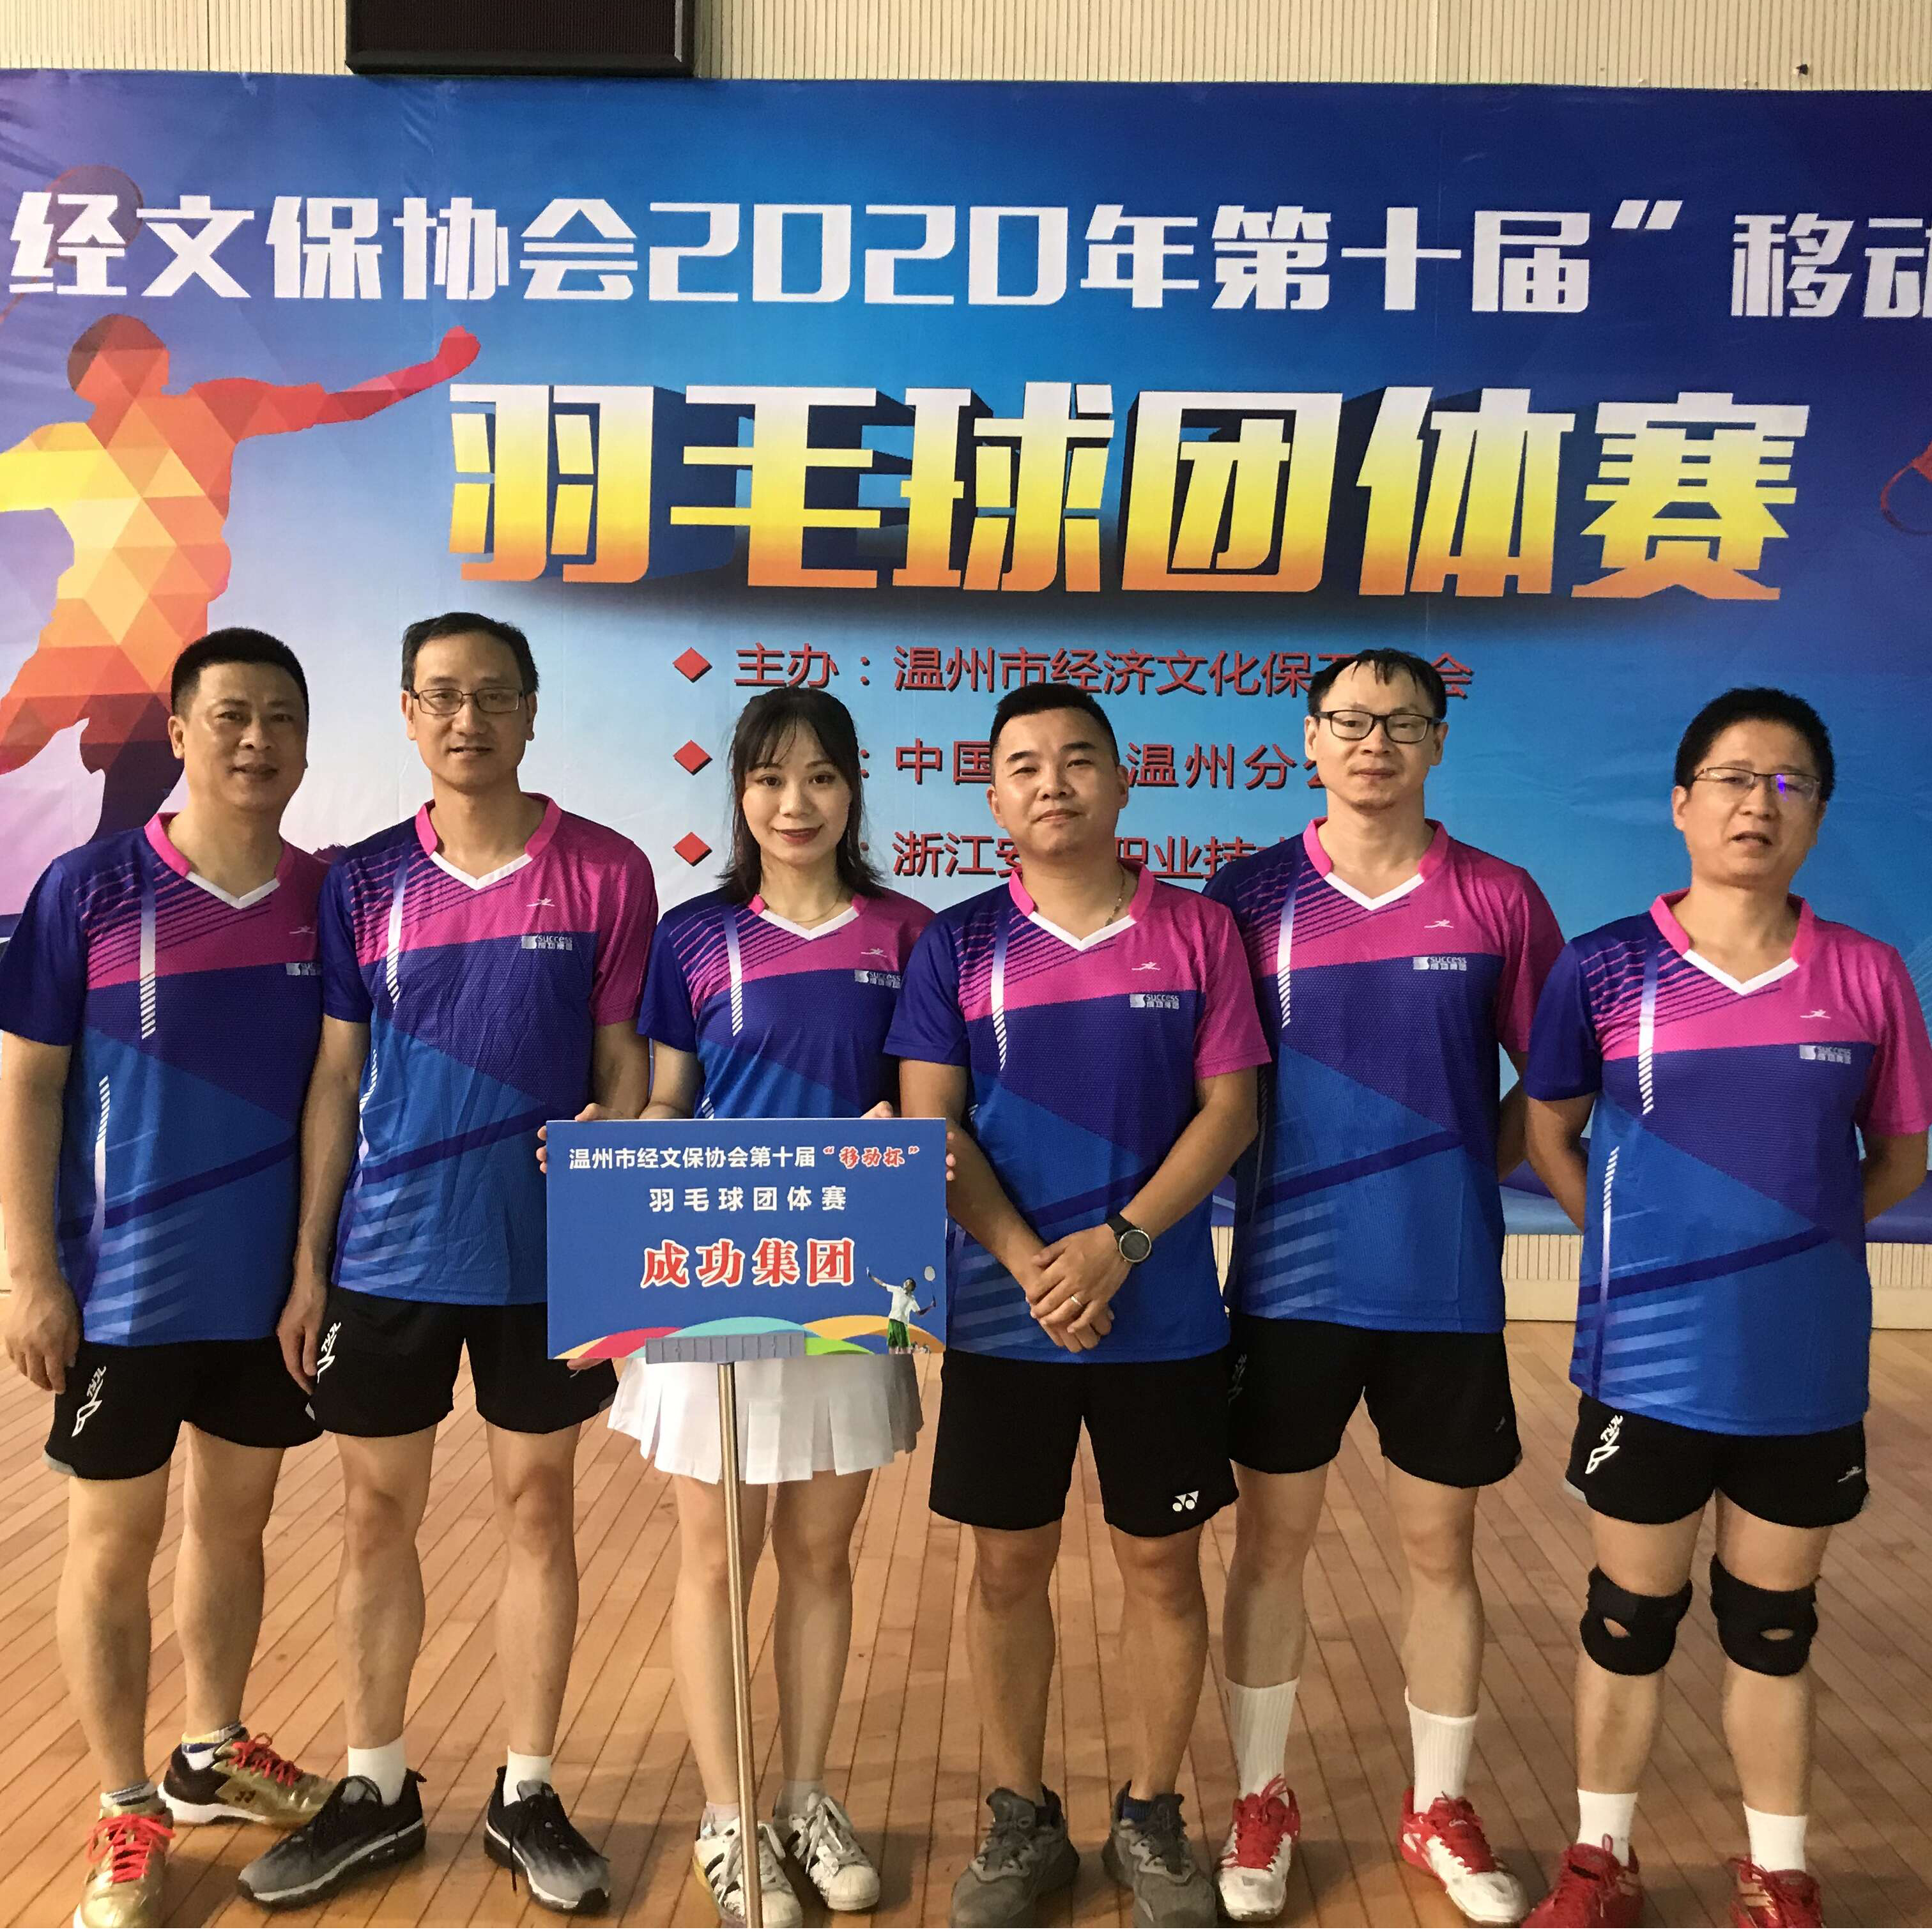  badminton team competition